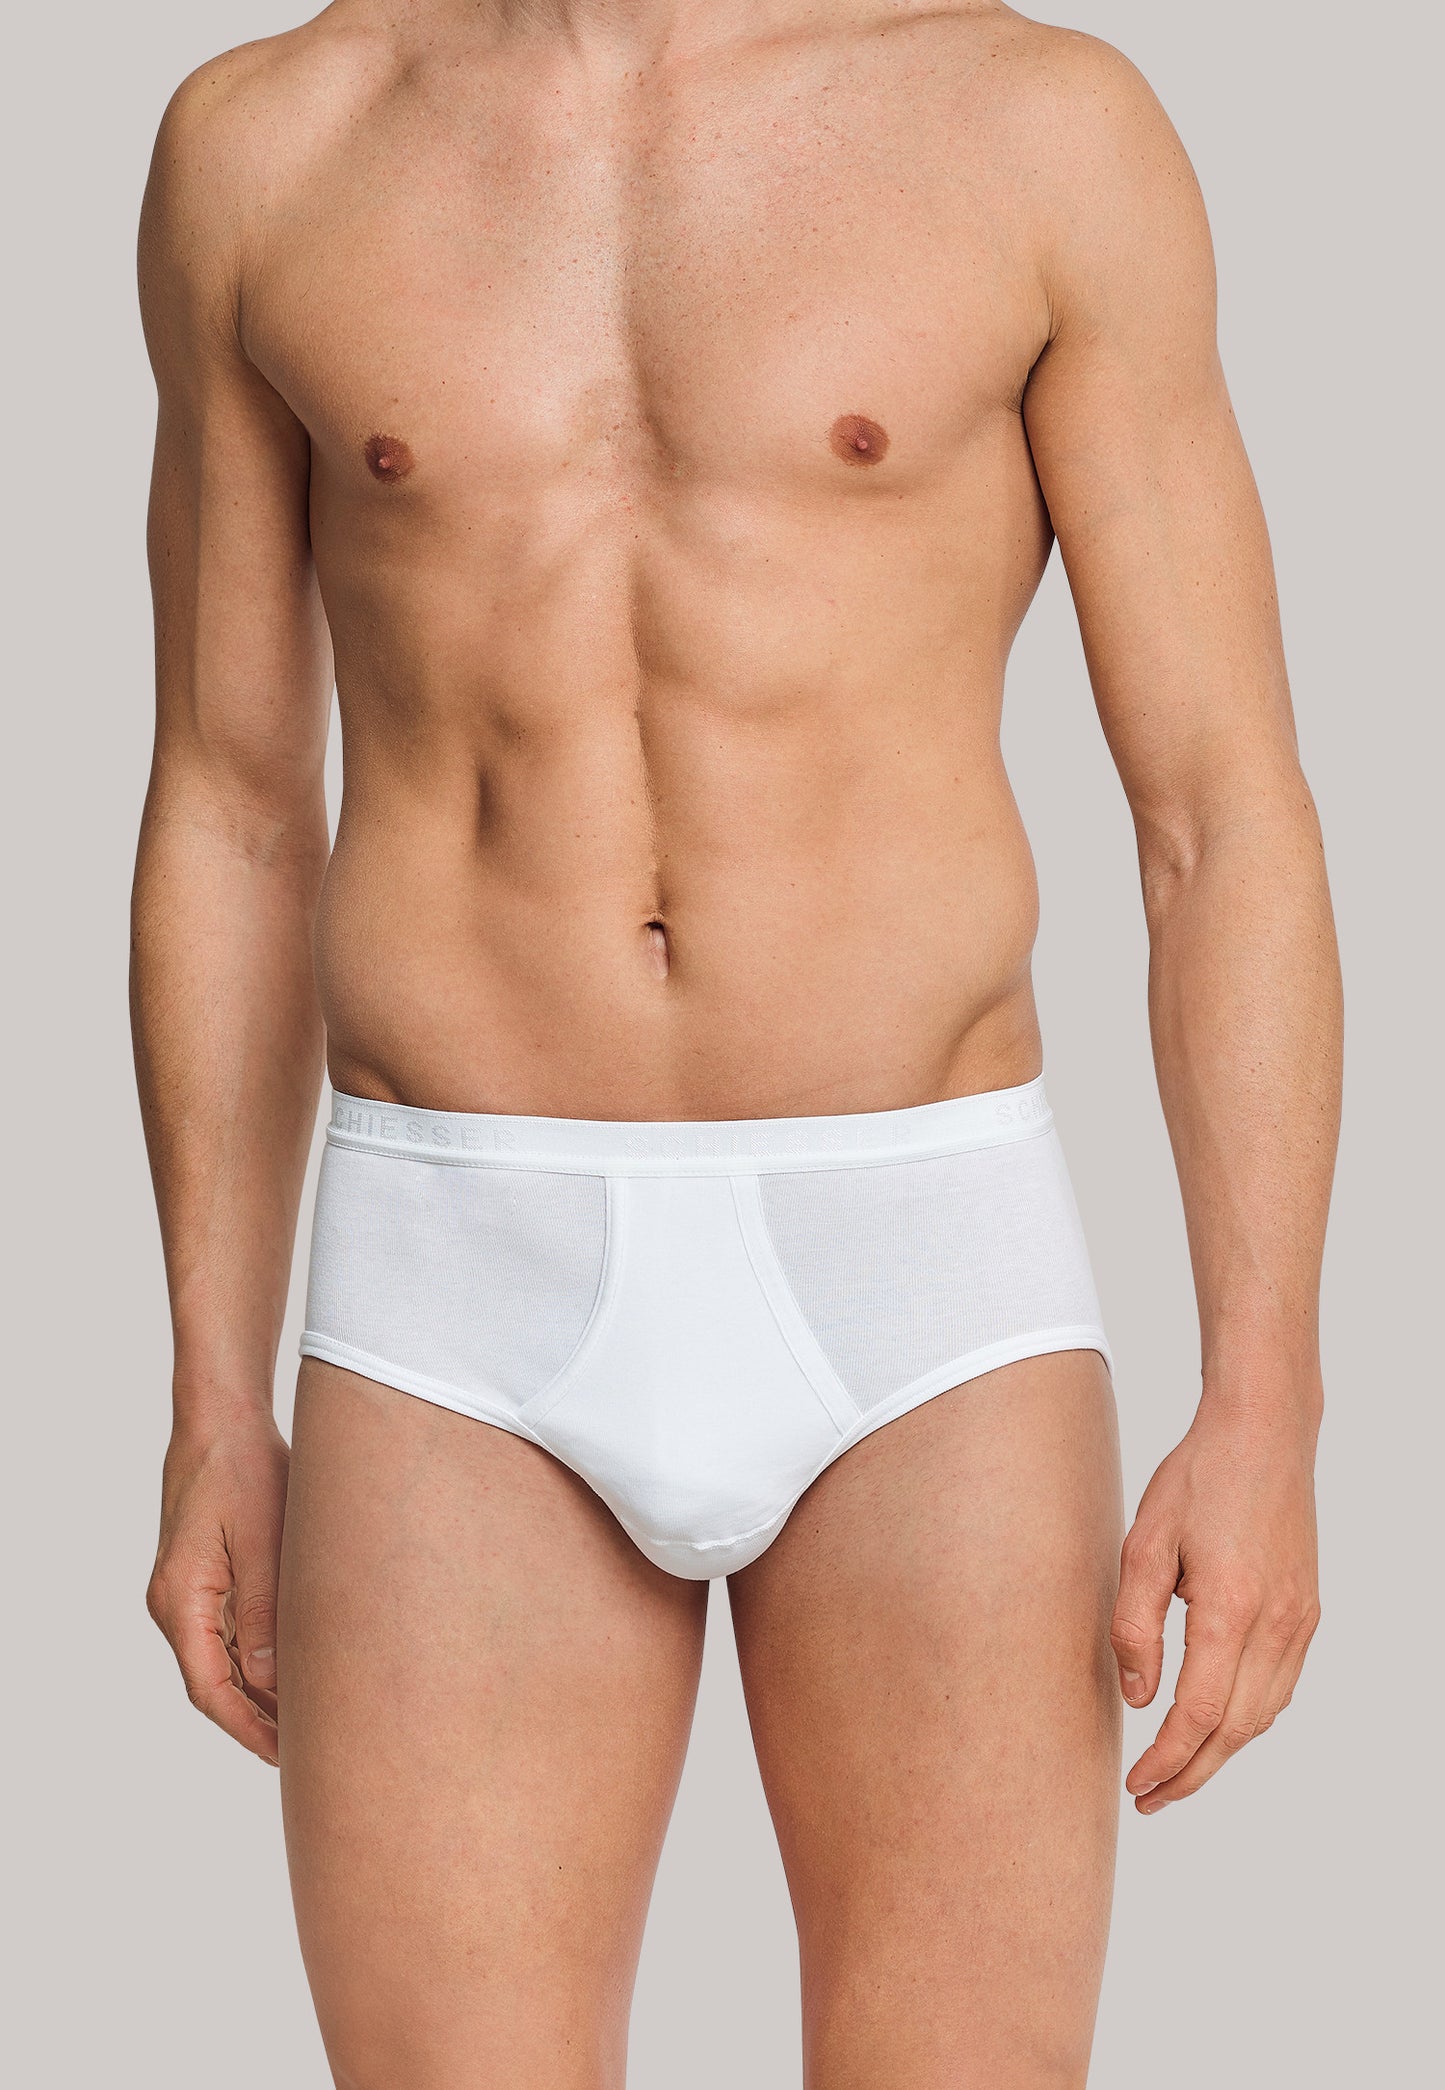 Swim briefs Underpants Undergarment Feinripp, black sock, white